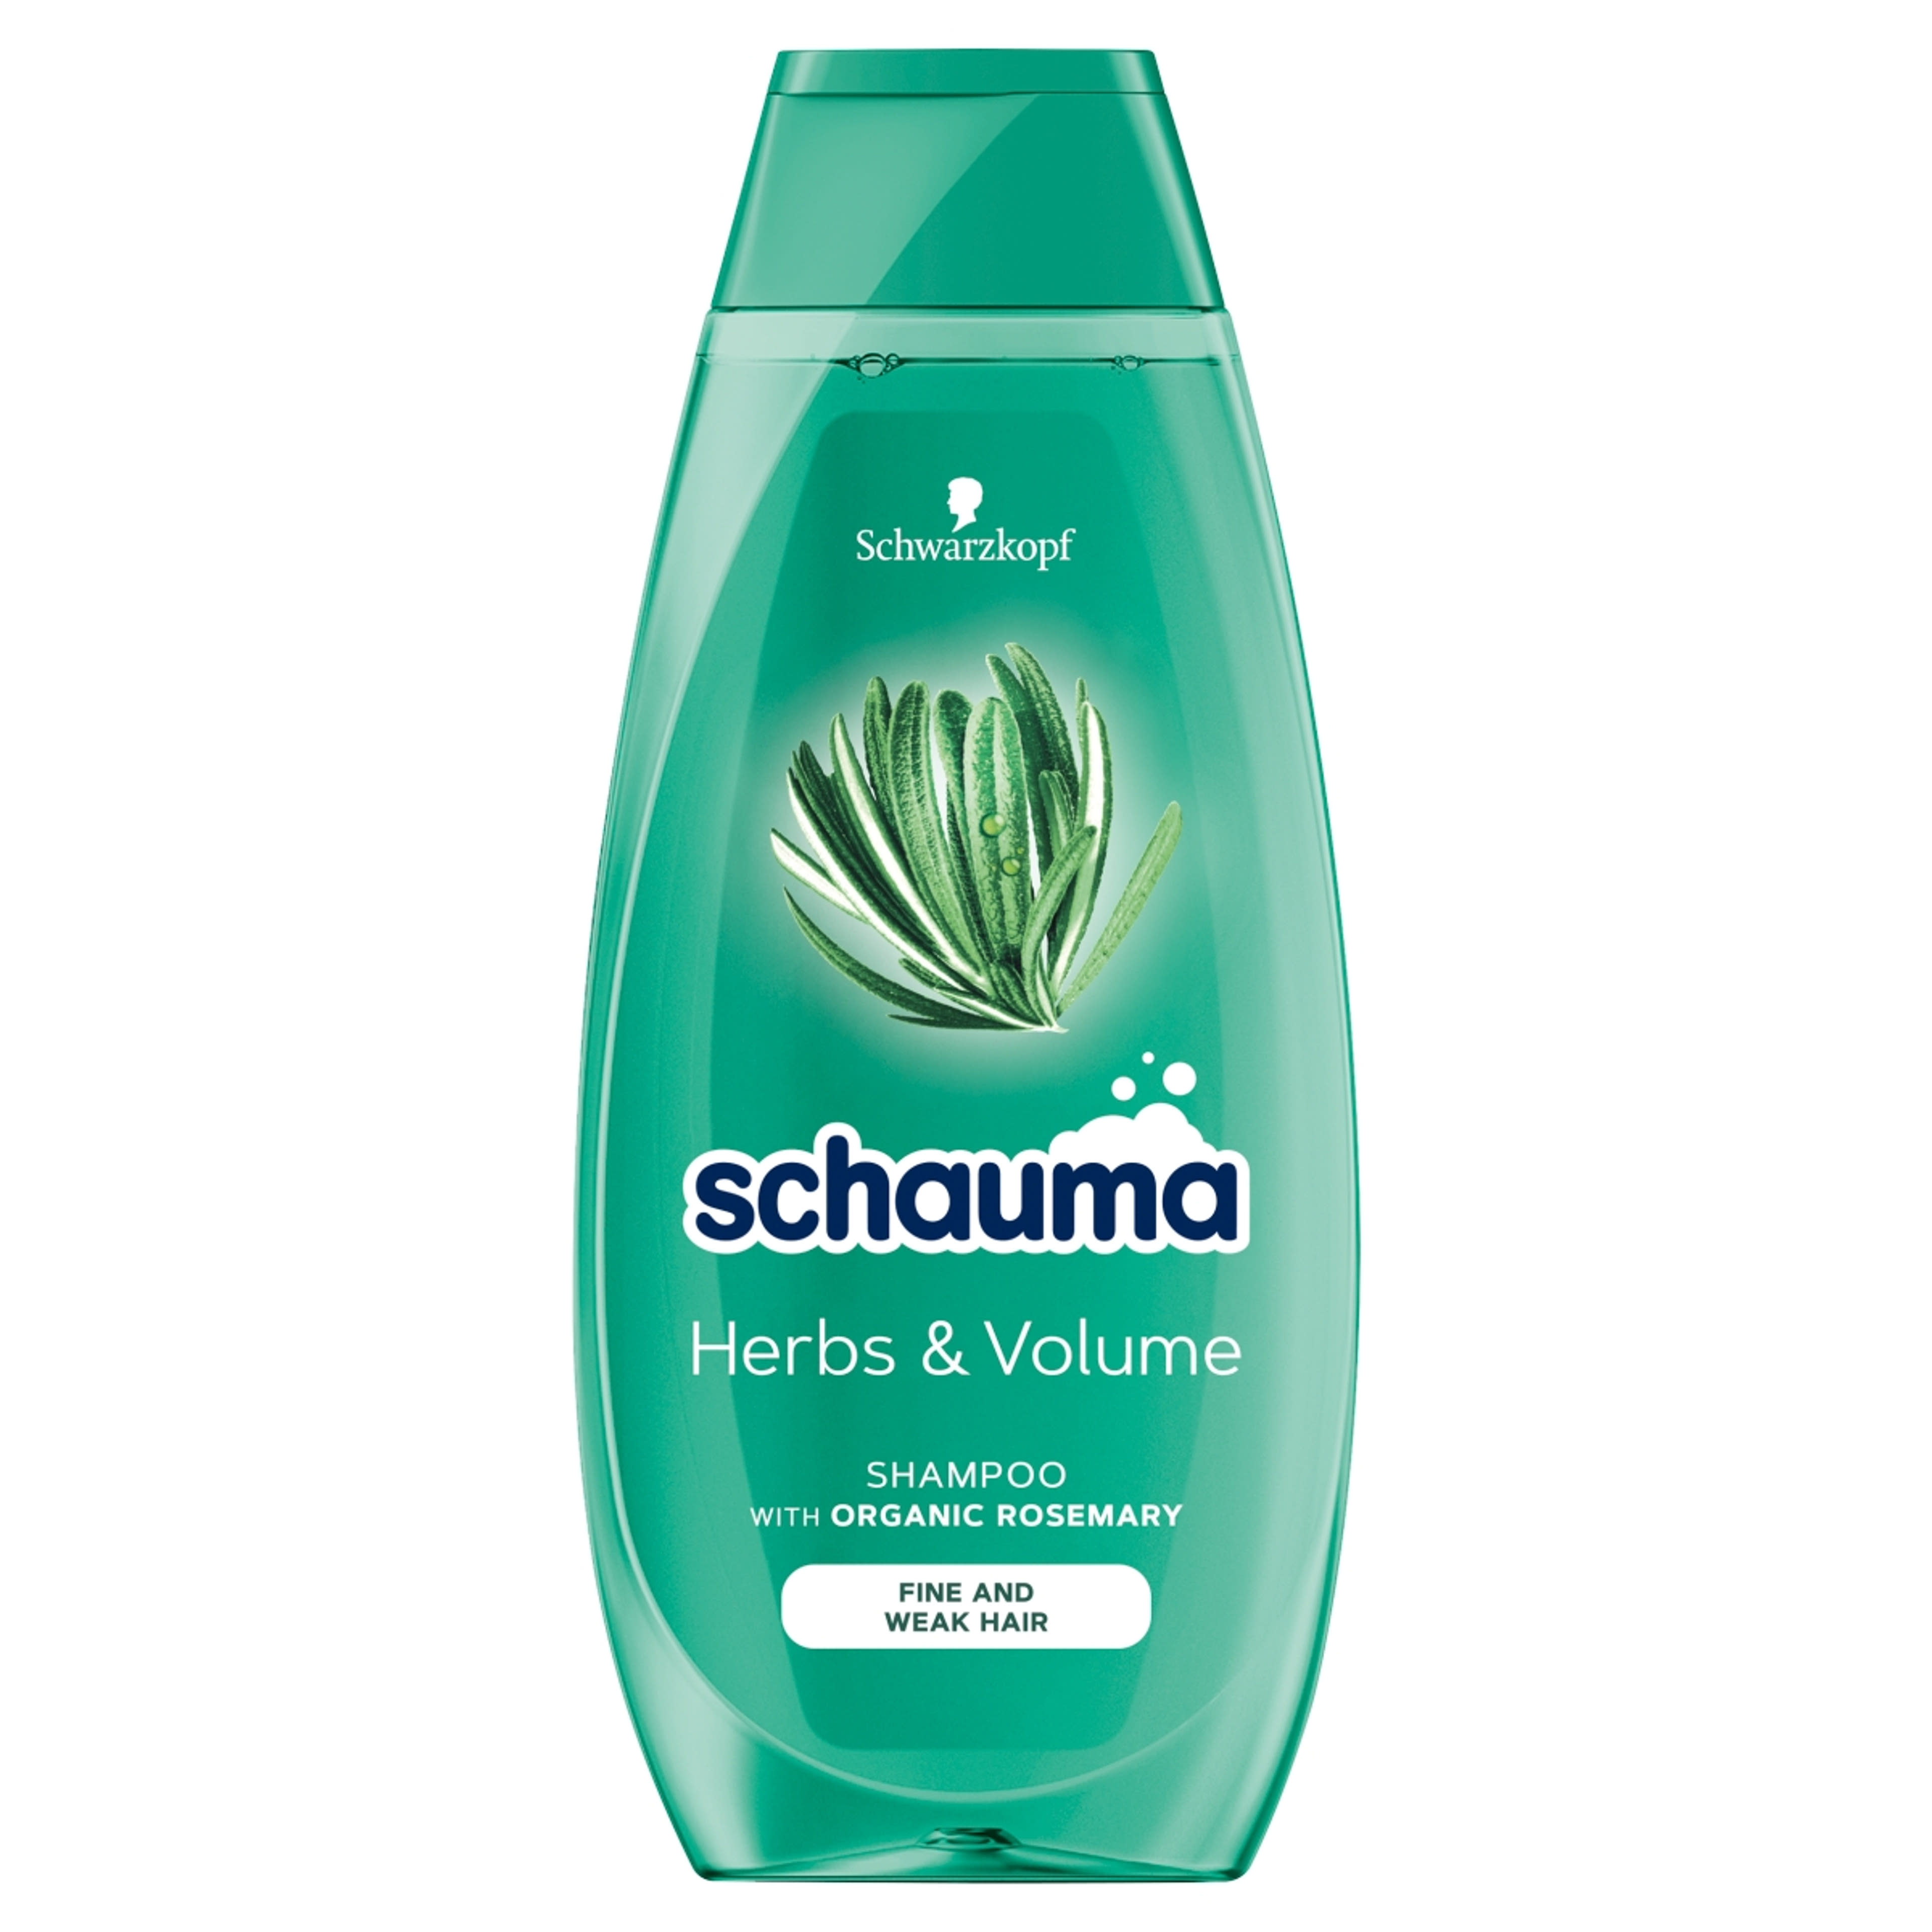 Schauma Herbs & Volume sampon, organikus rozmaring - 400 ml